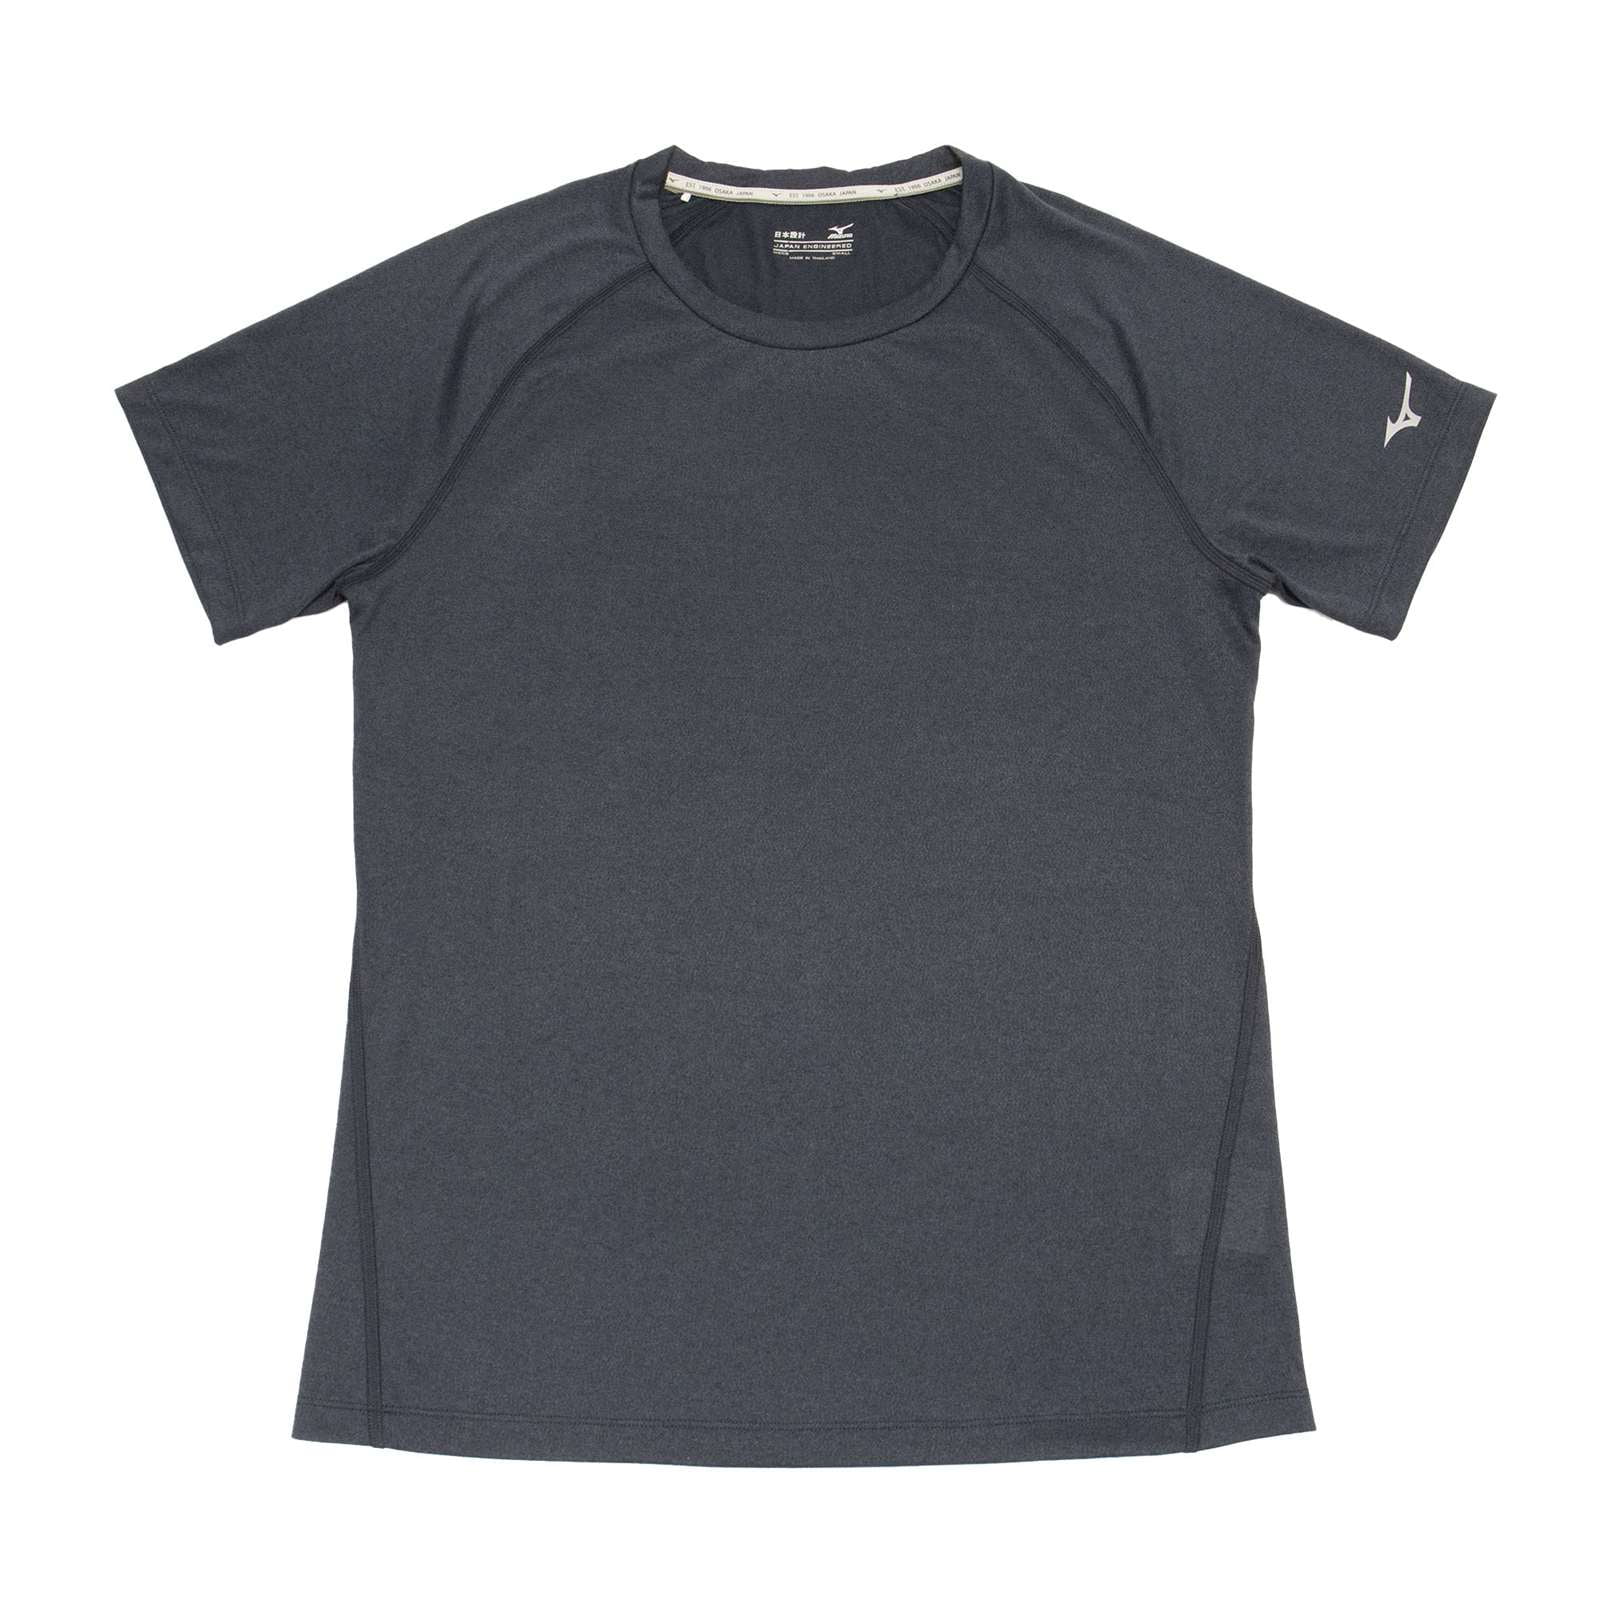 Mizuno Homme Aero Graphique T Shirt Tee Top-Bleu Sport Running Gym Respirant 